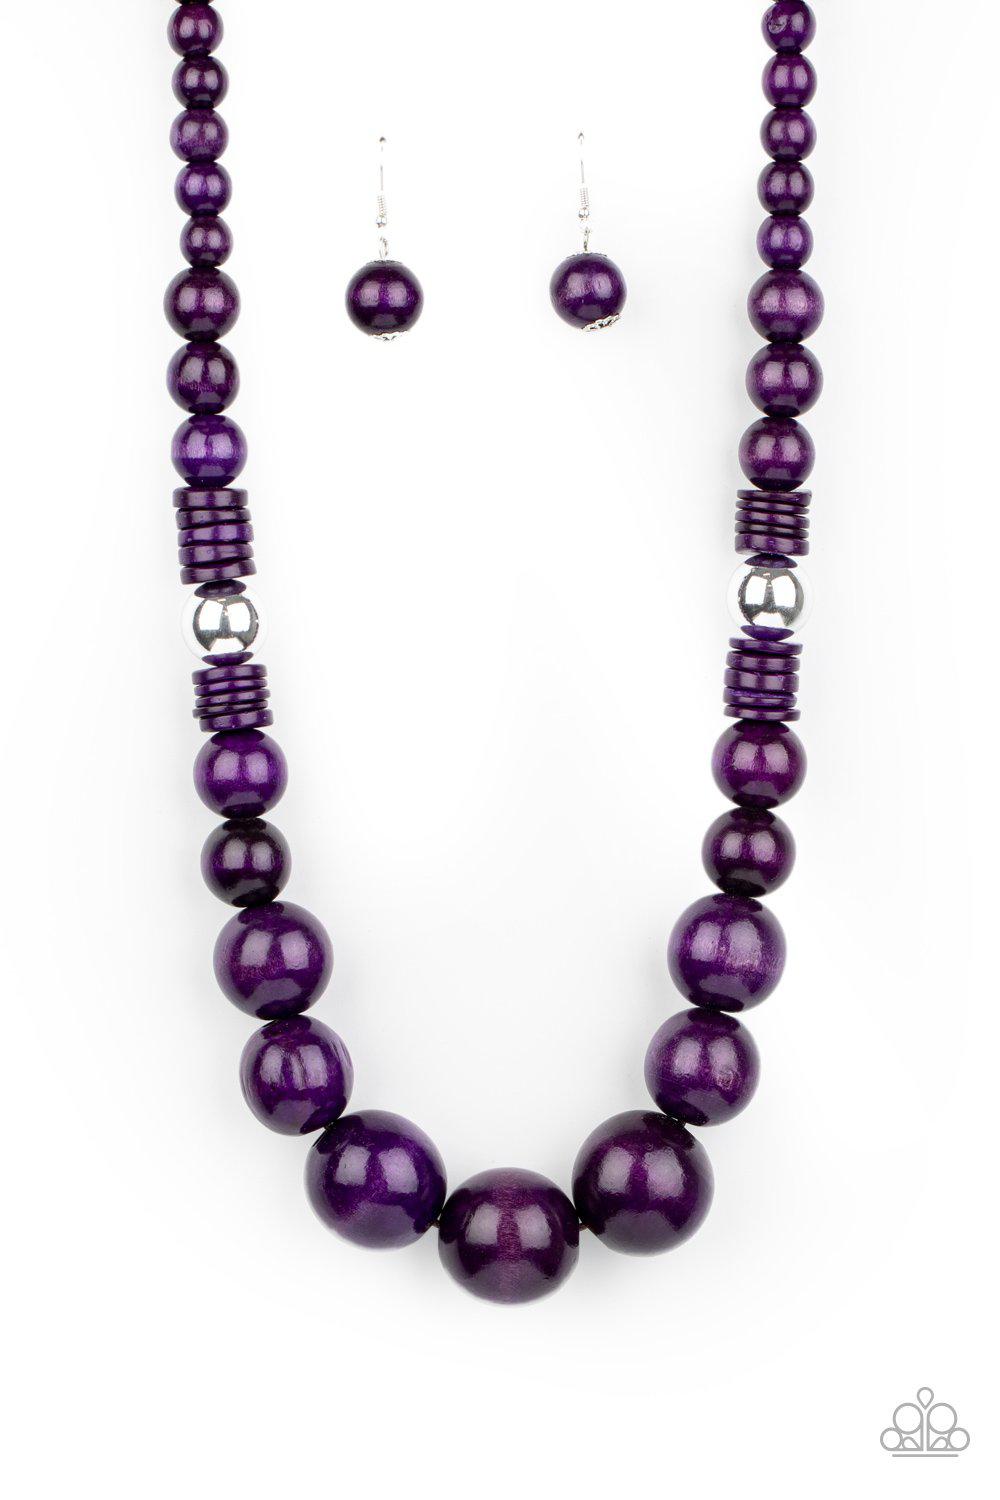 Panama Panorama Purple Wood Necklace - Paparazzi Accessories-CarasShop.com - $5 Jewelry by Cara Jewels